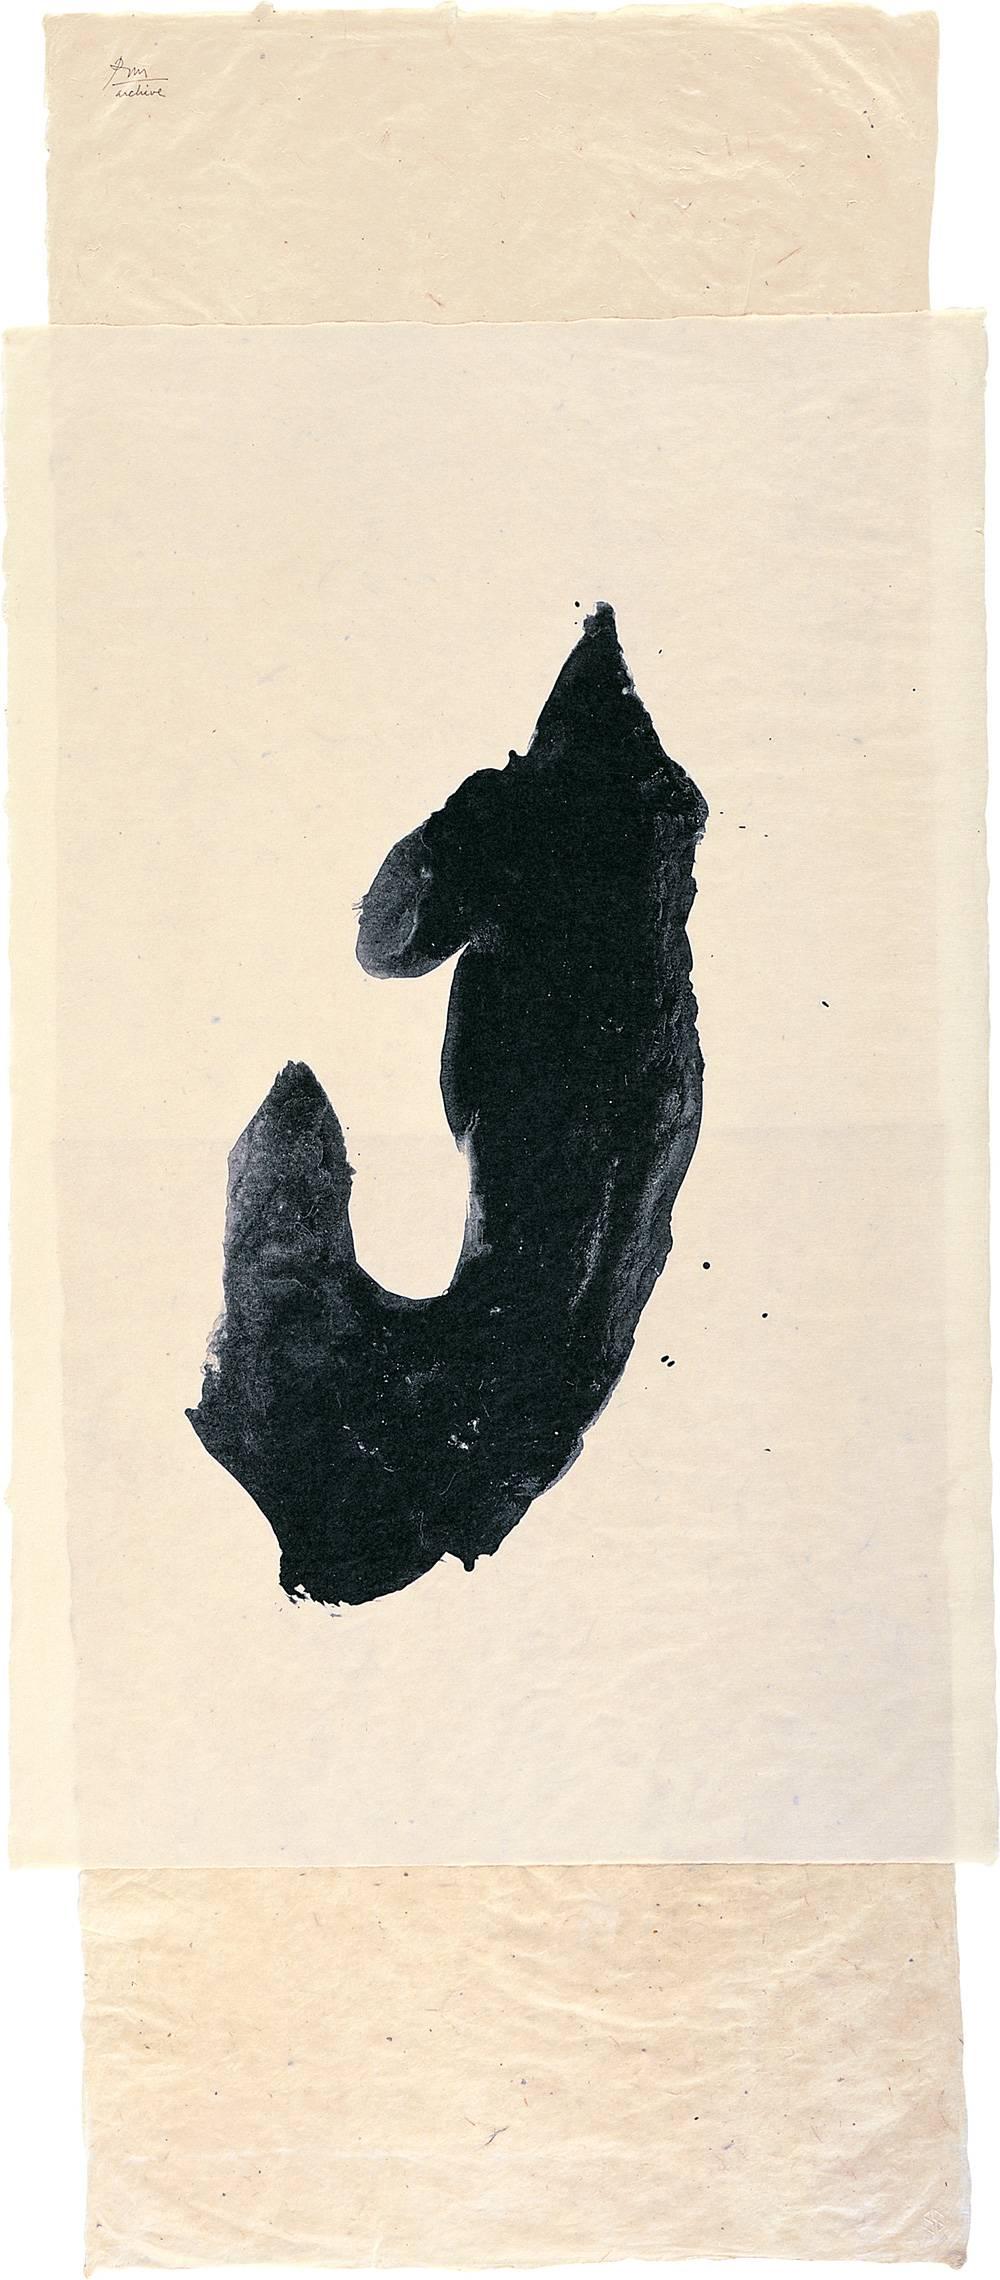 Robert Motherwell Abstract Print - Samurai II